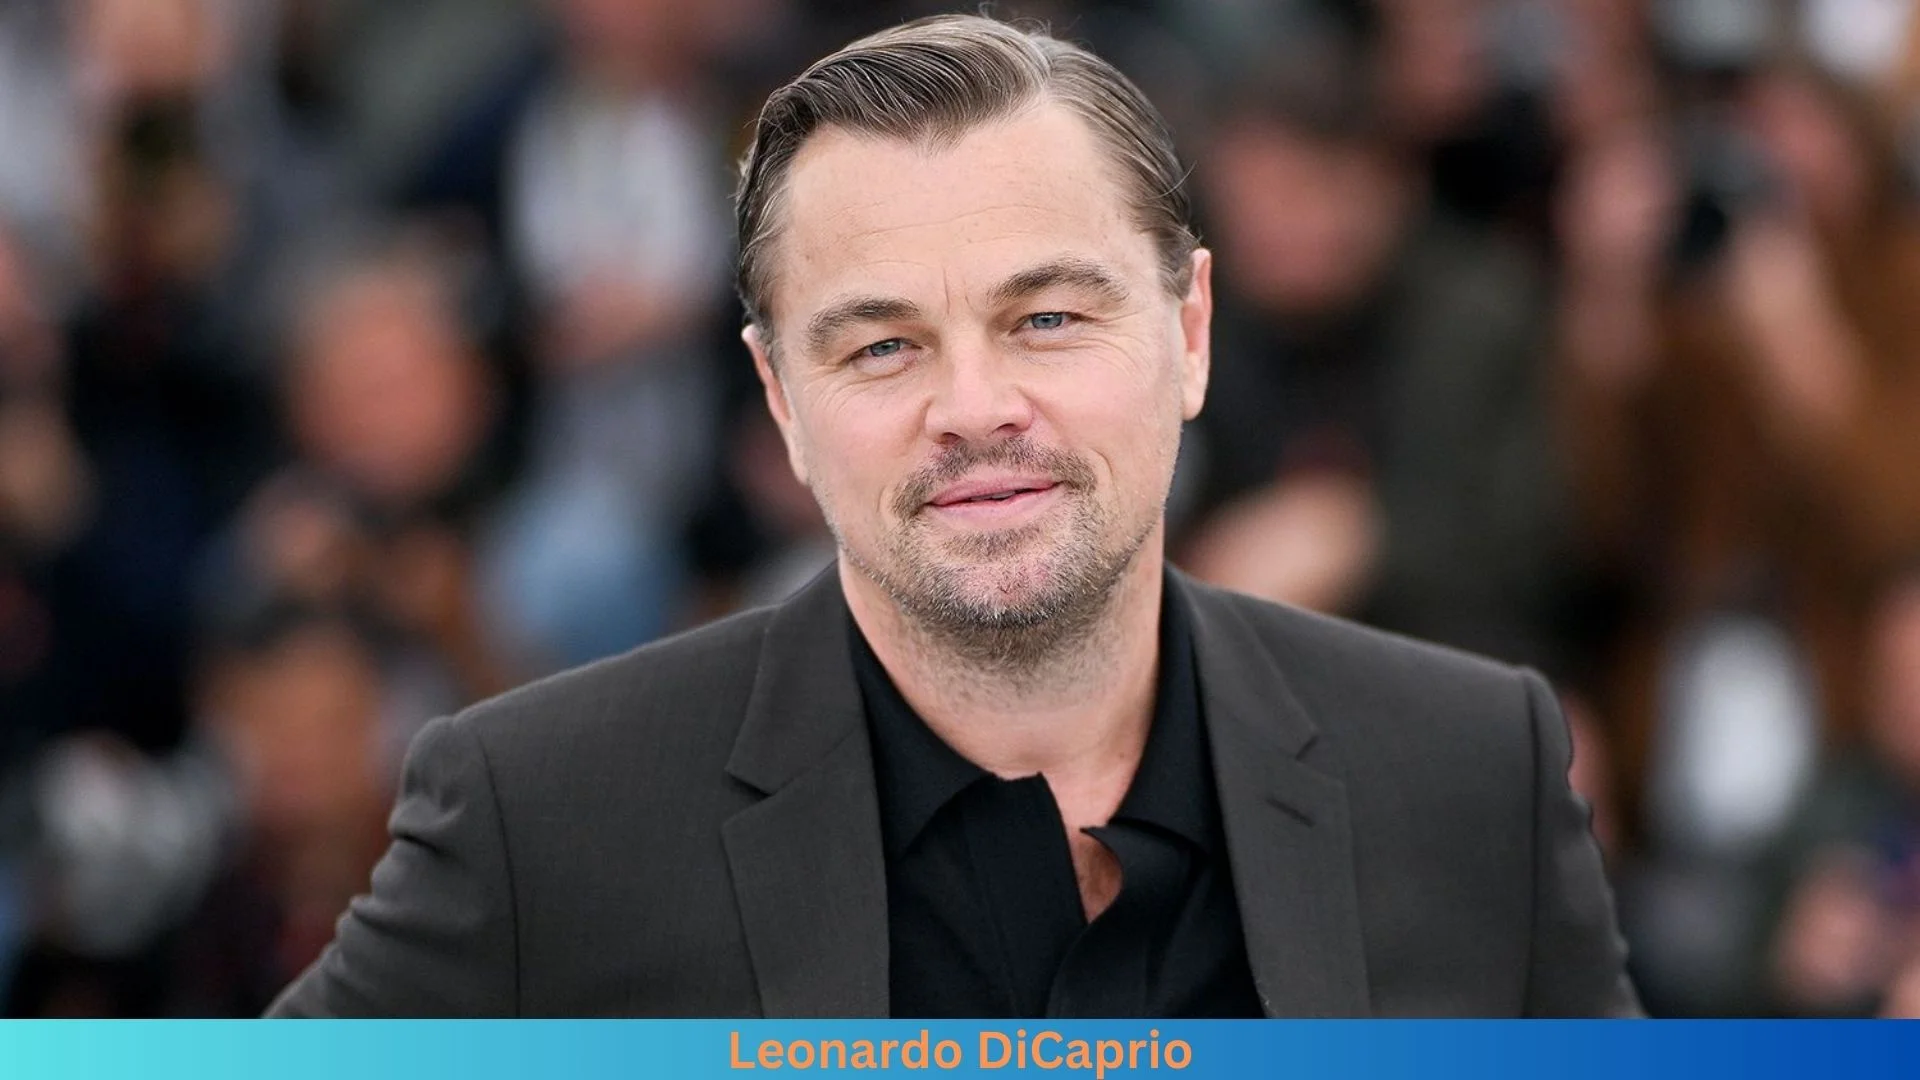 Net worth of Leonardo DiCaprio